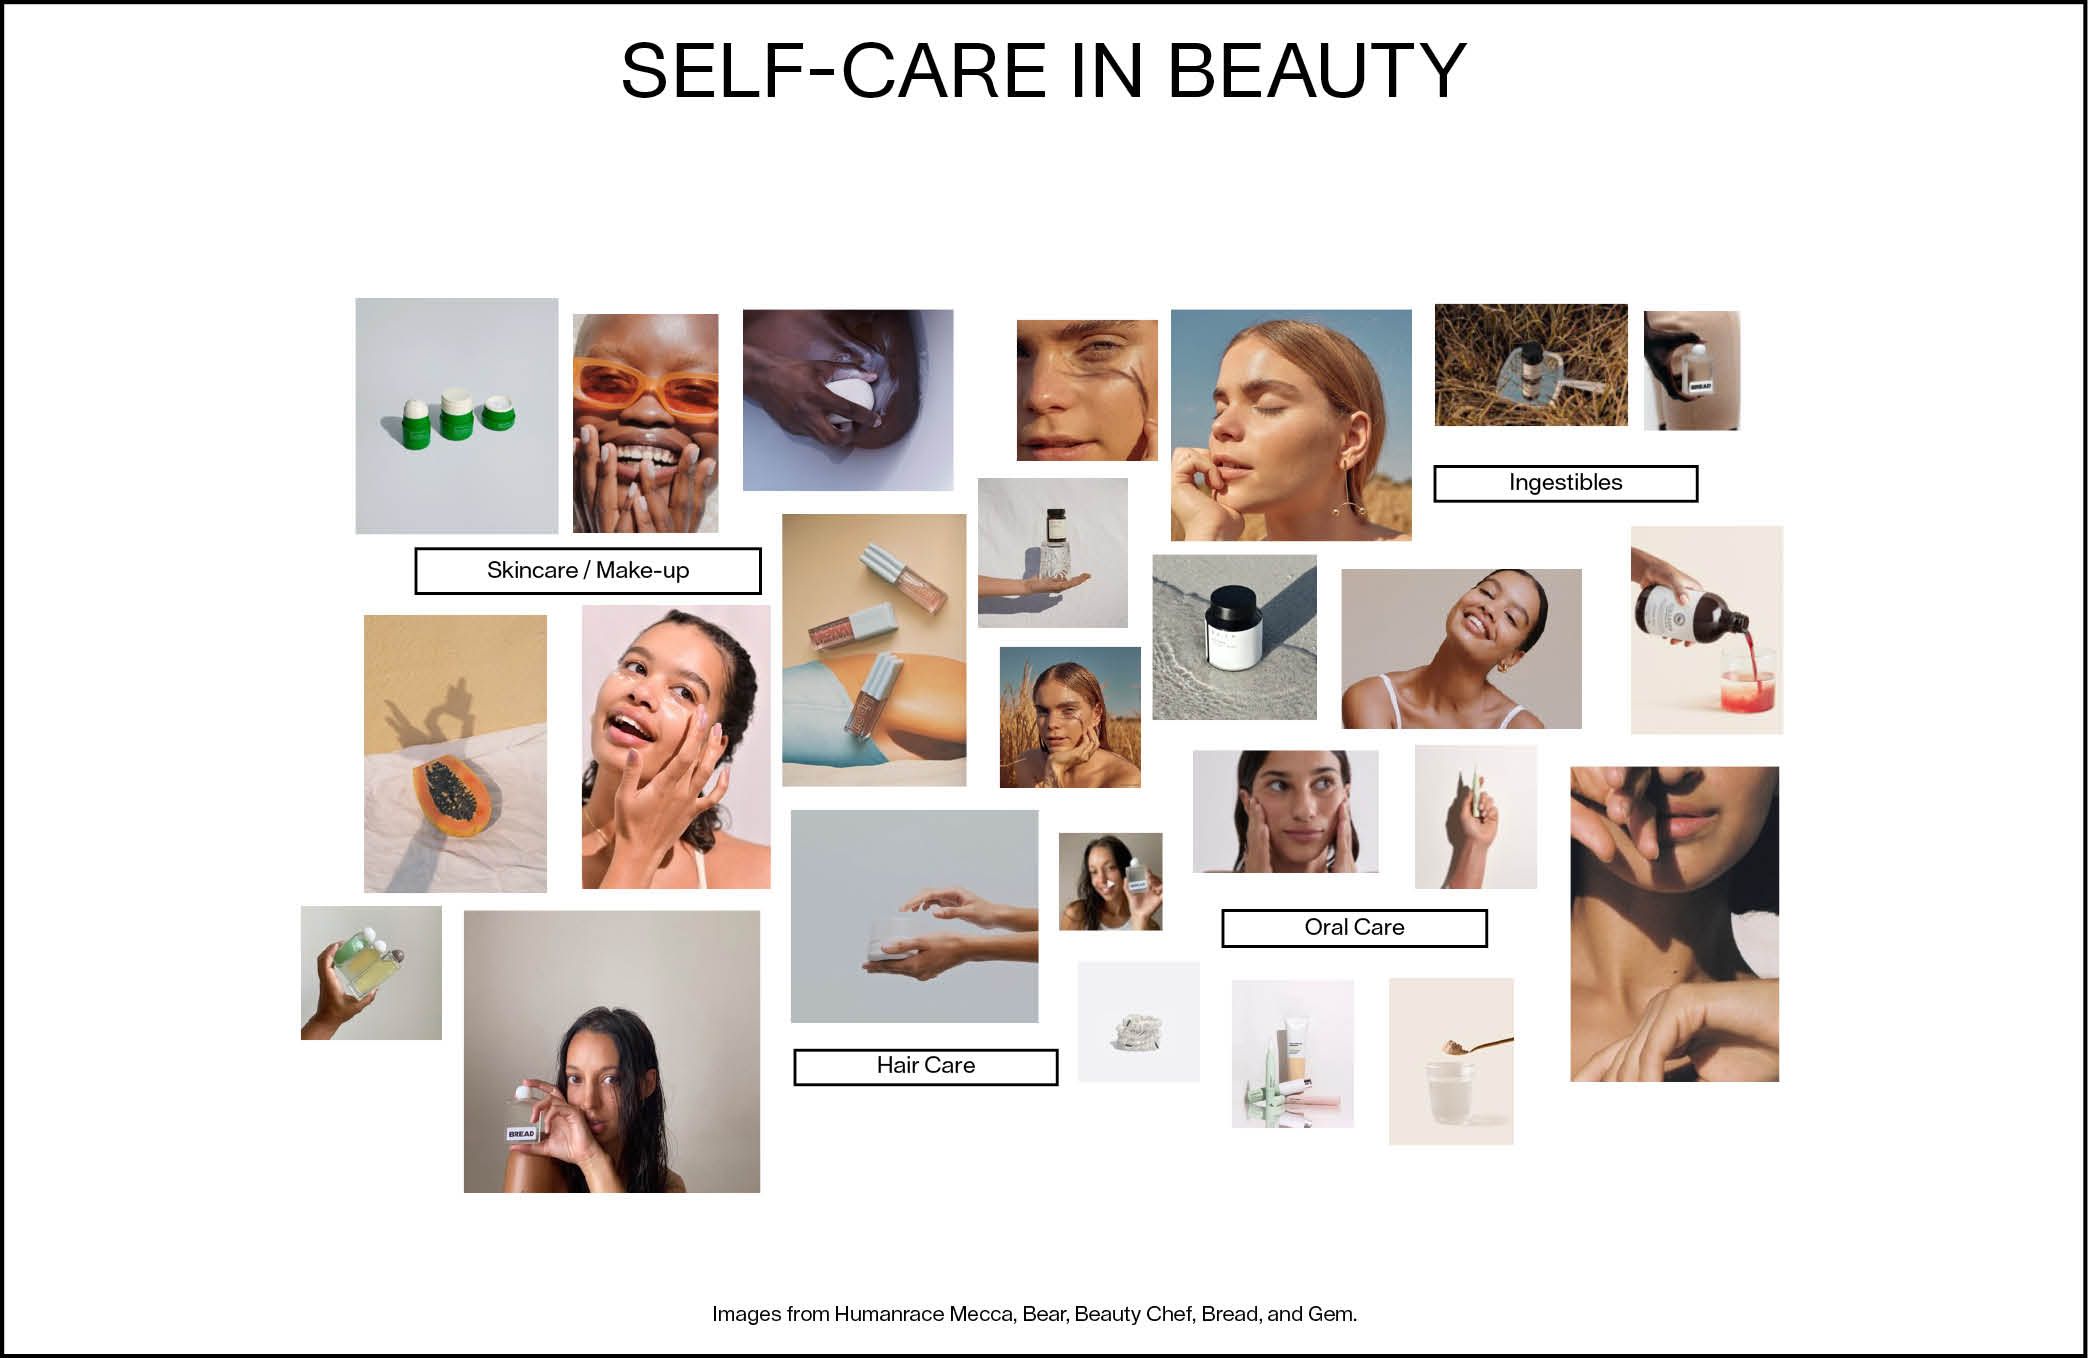 Self-care in beauty